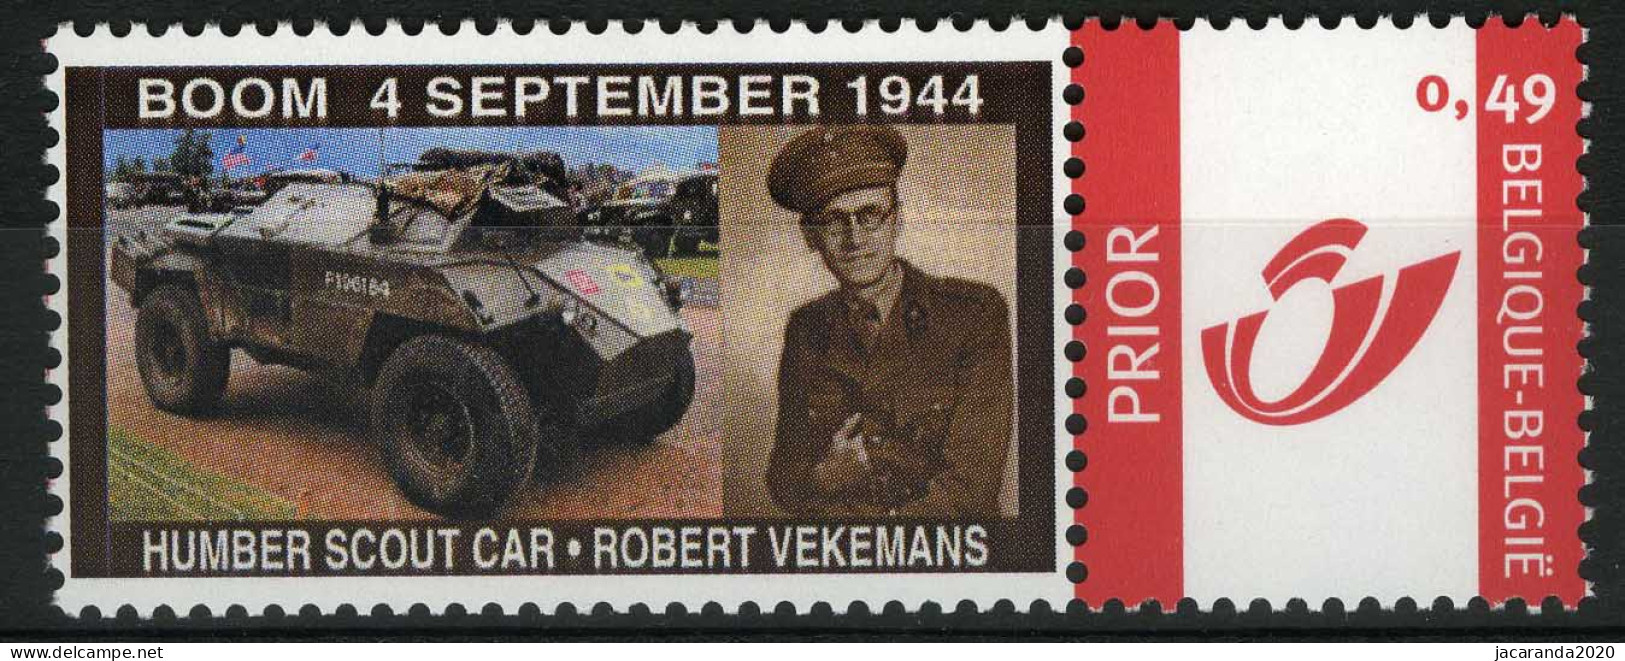 België 3183 - Duostamp - Humber Scout Car - Vekemans - Oorlog - Tank - Boom 4 September 1944 - Neufs